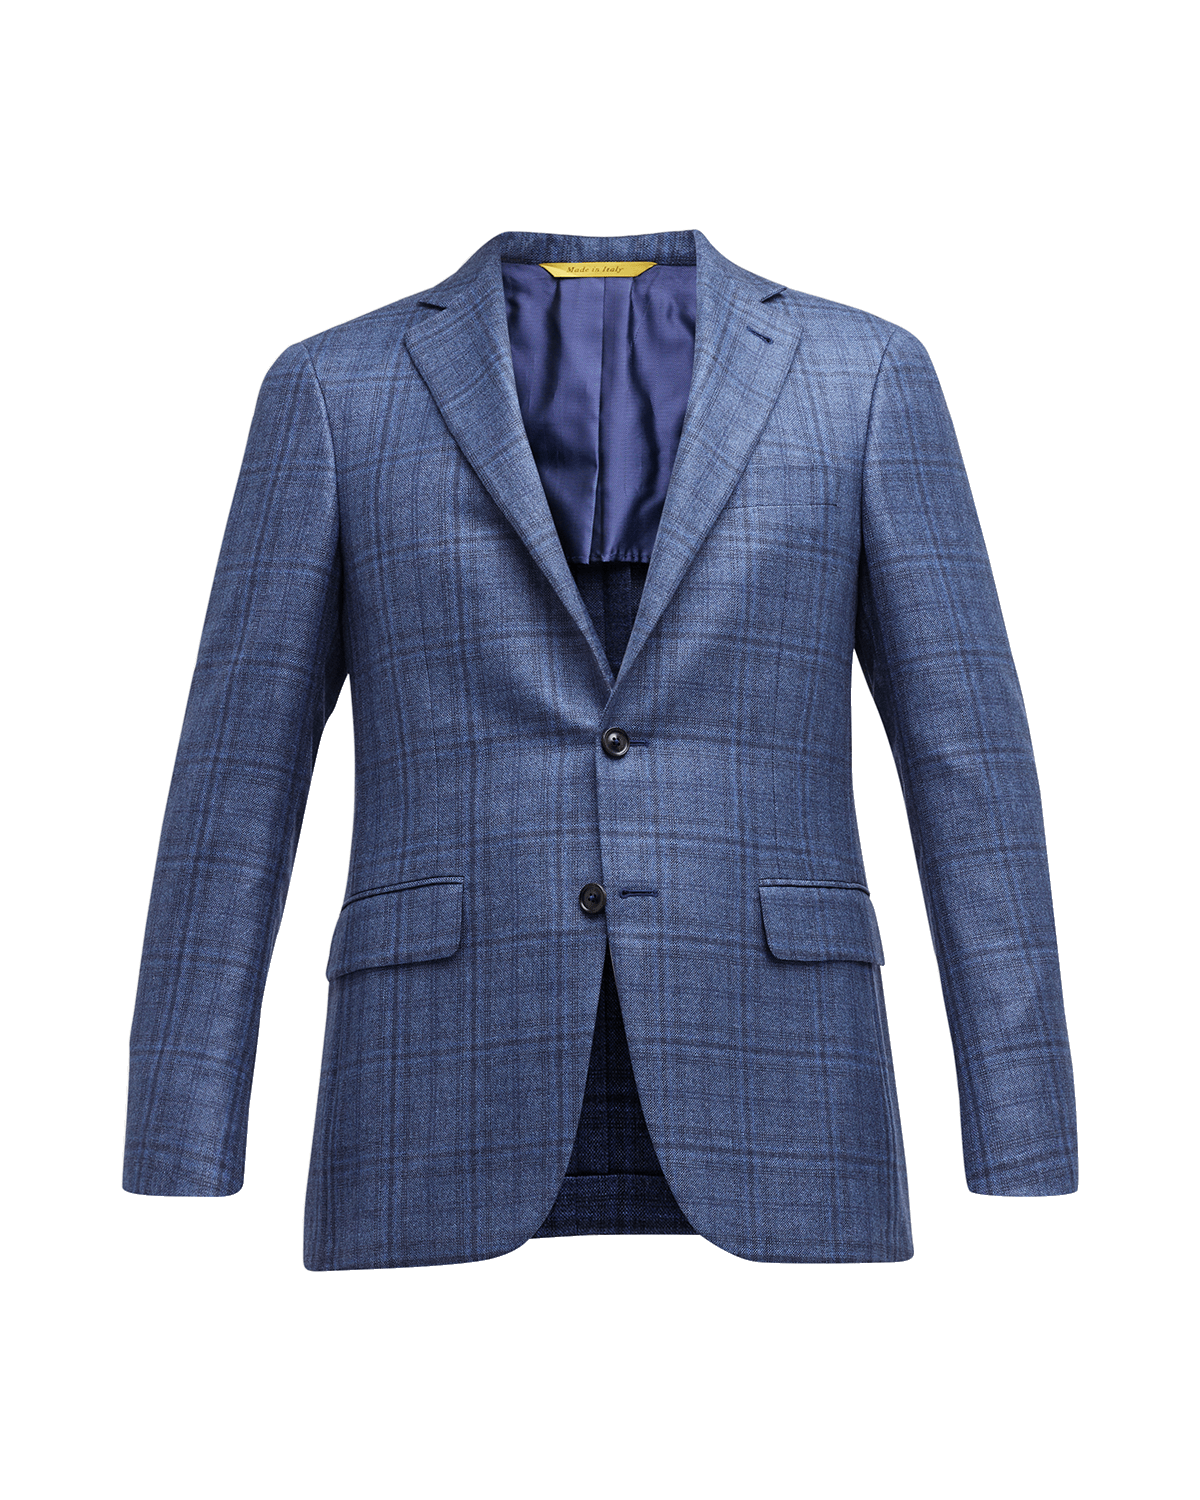 Emporio Armani Men's Textured Check Dinner Jacket | Neiman Marcus